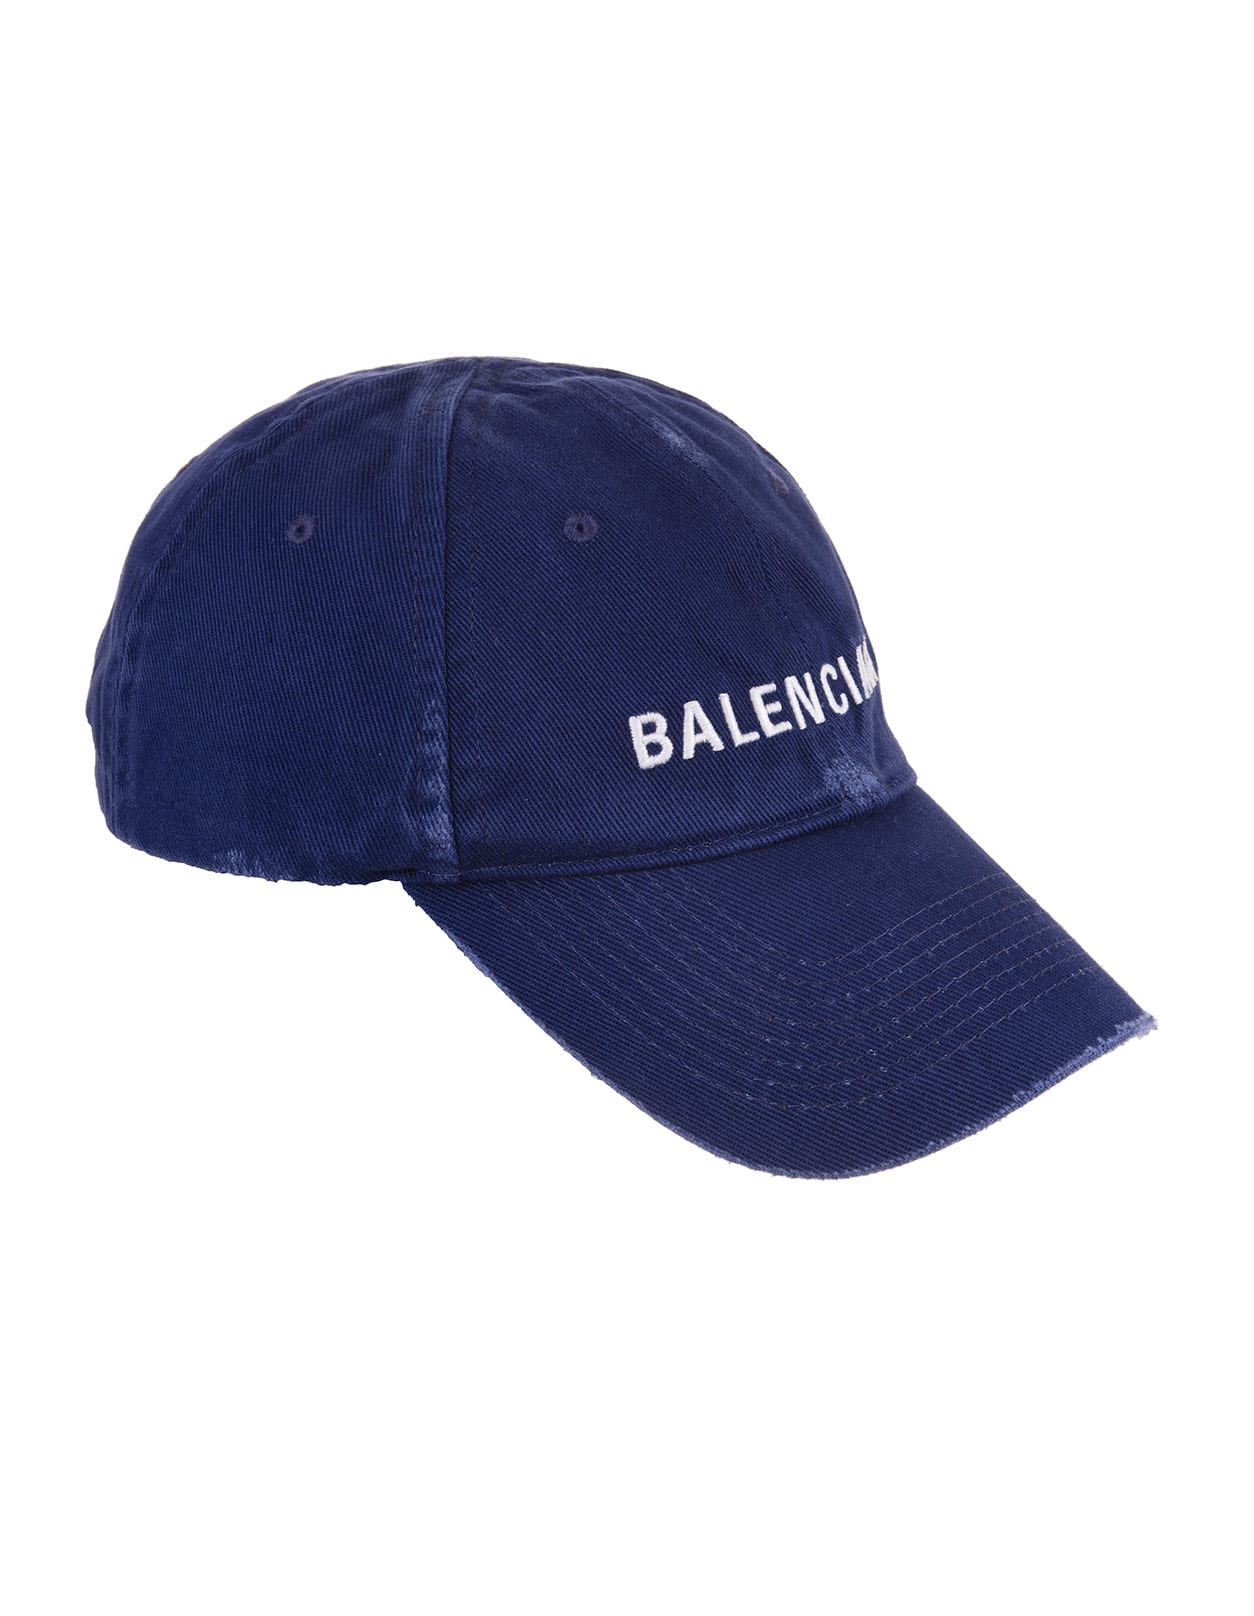 BALENCIAGA WOMAN BLUE BASEBALL CAP WITH WHITE LOGO,590758-4A9B9 4077